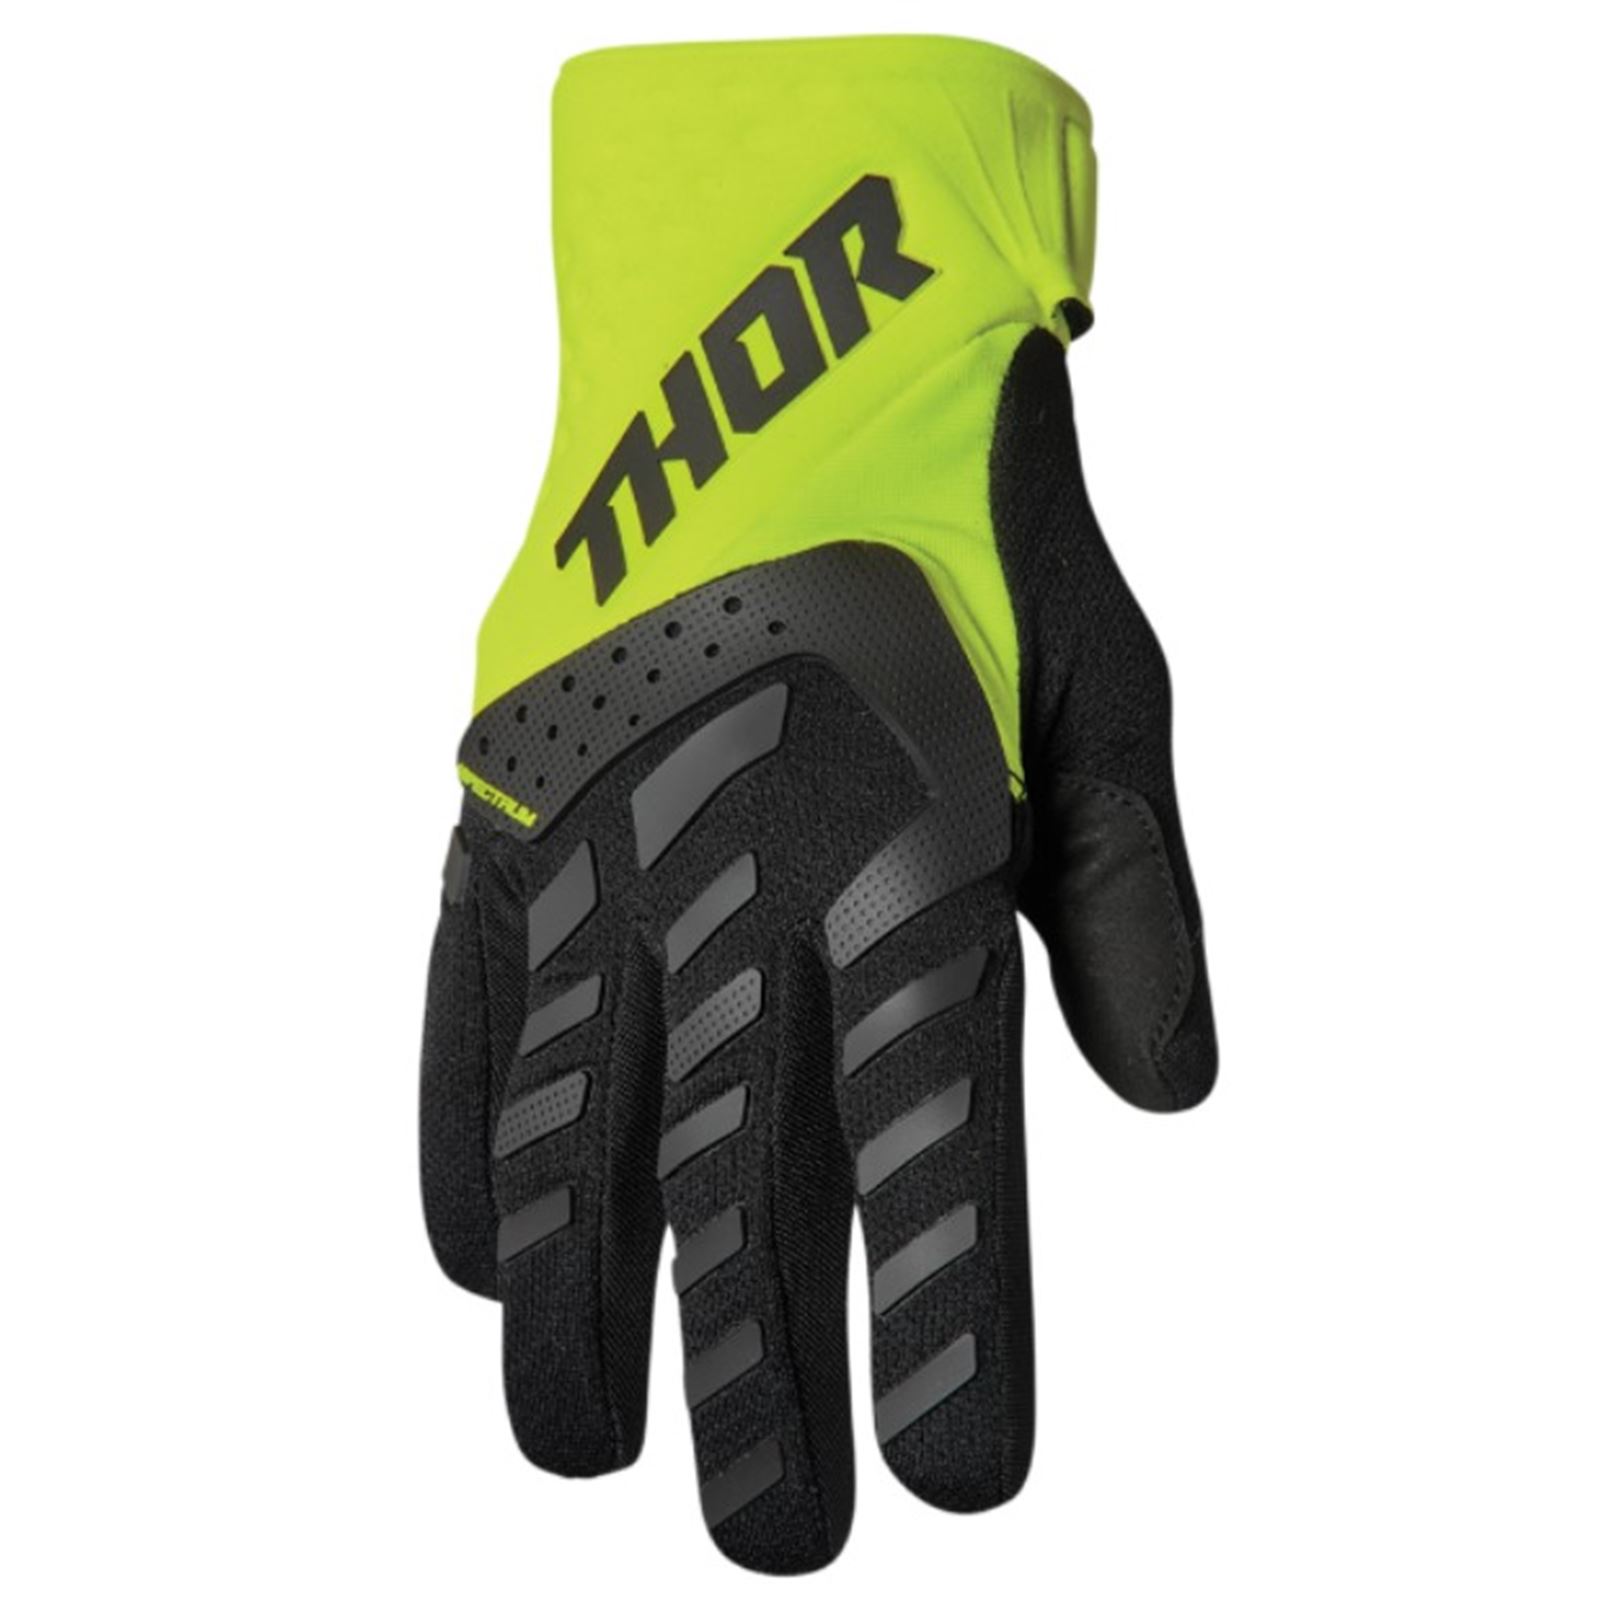 Thor Youth Spectrum Gloves - Black/Acid - Medium